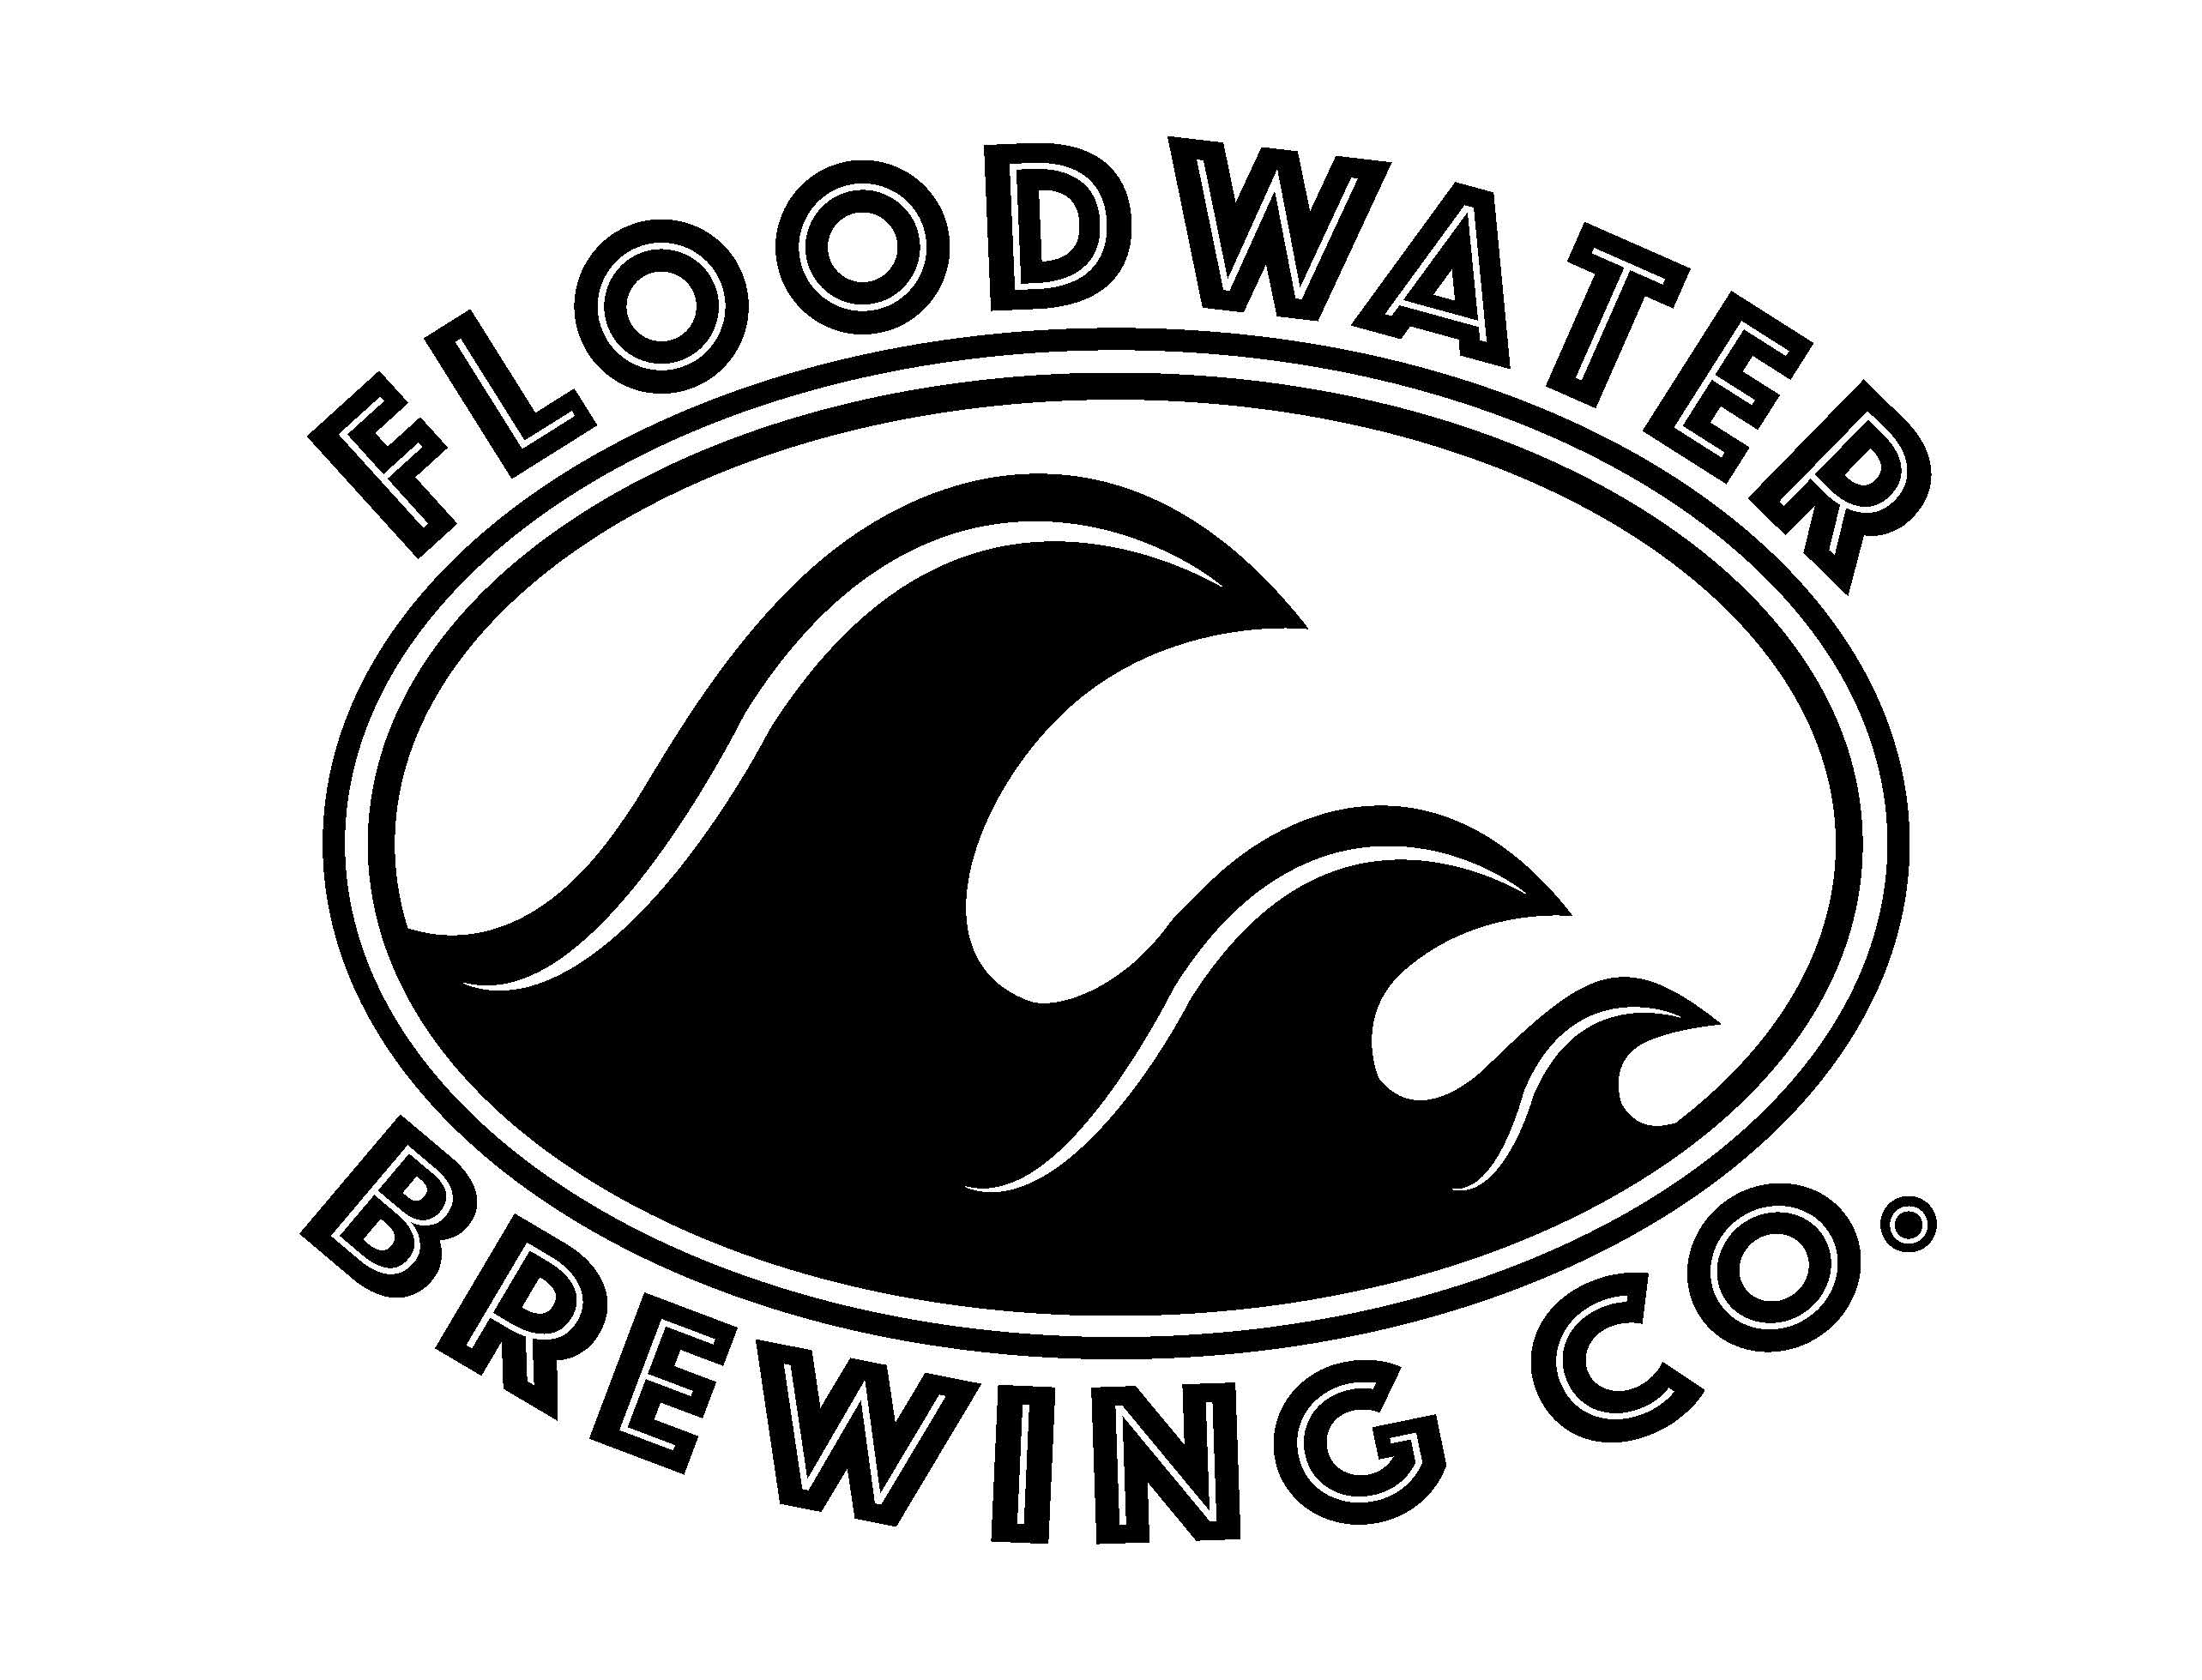 Flood Water Brewery